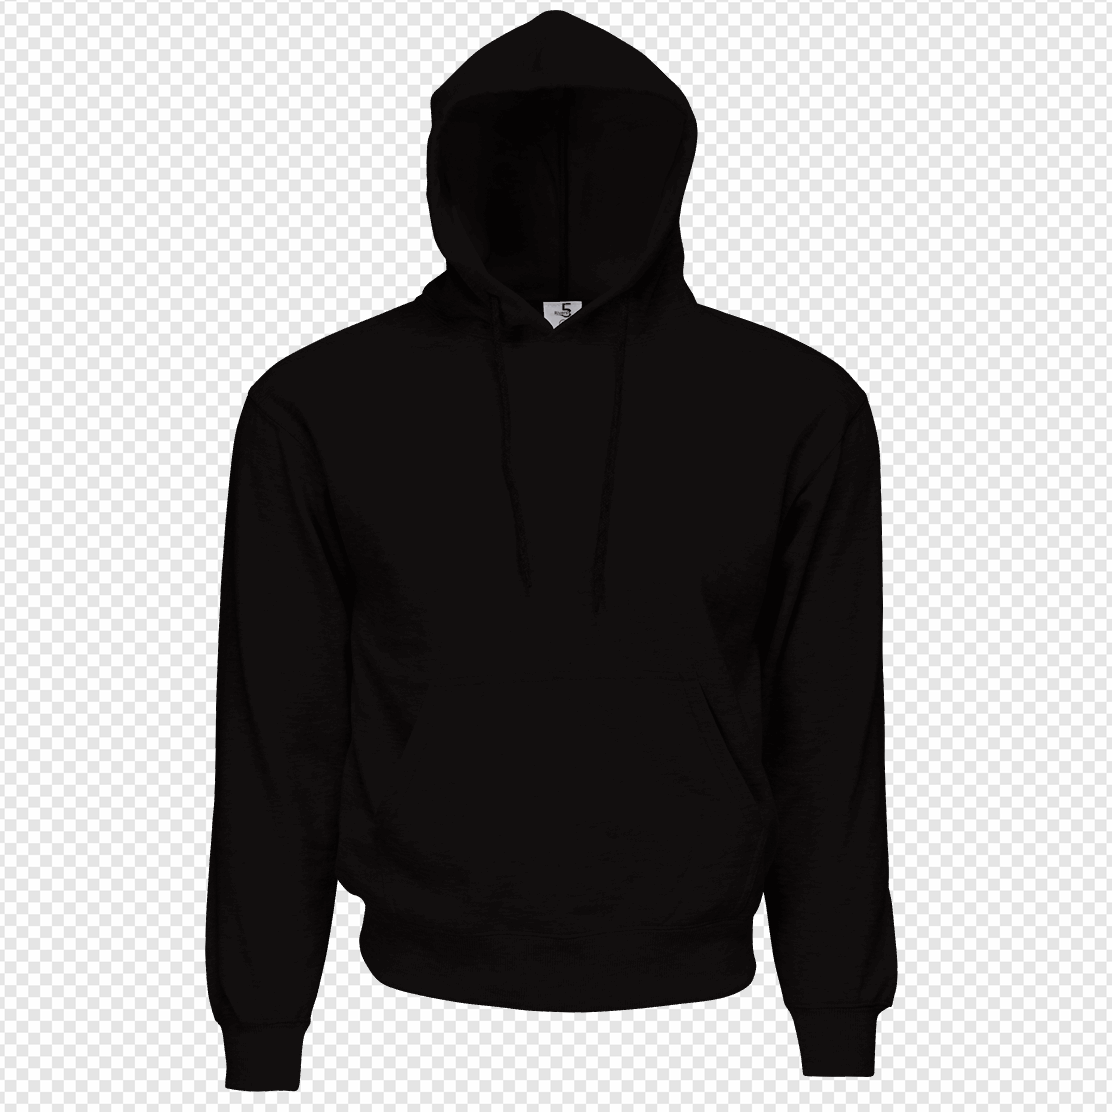 Black Sweatshirt PNG Transparent Images Download - PNG Packs